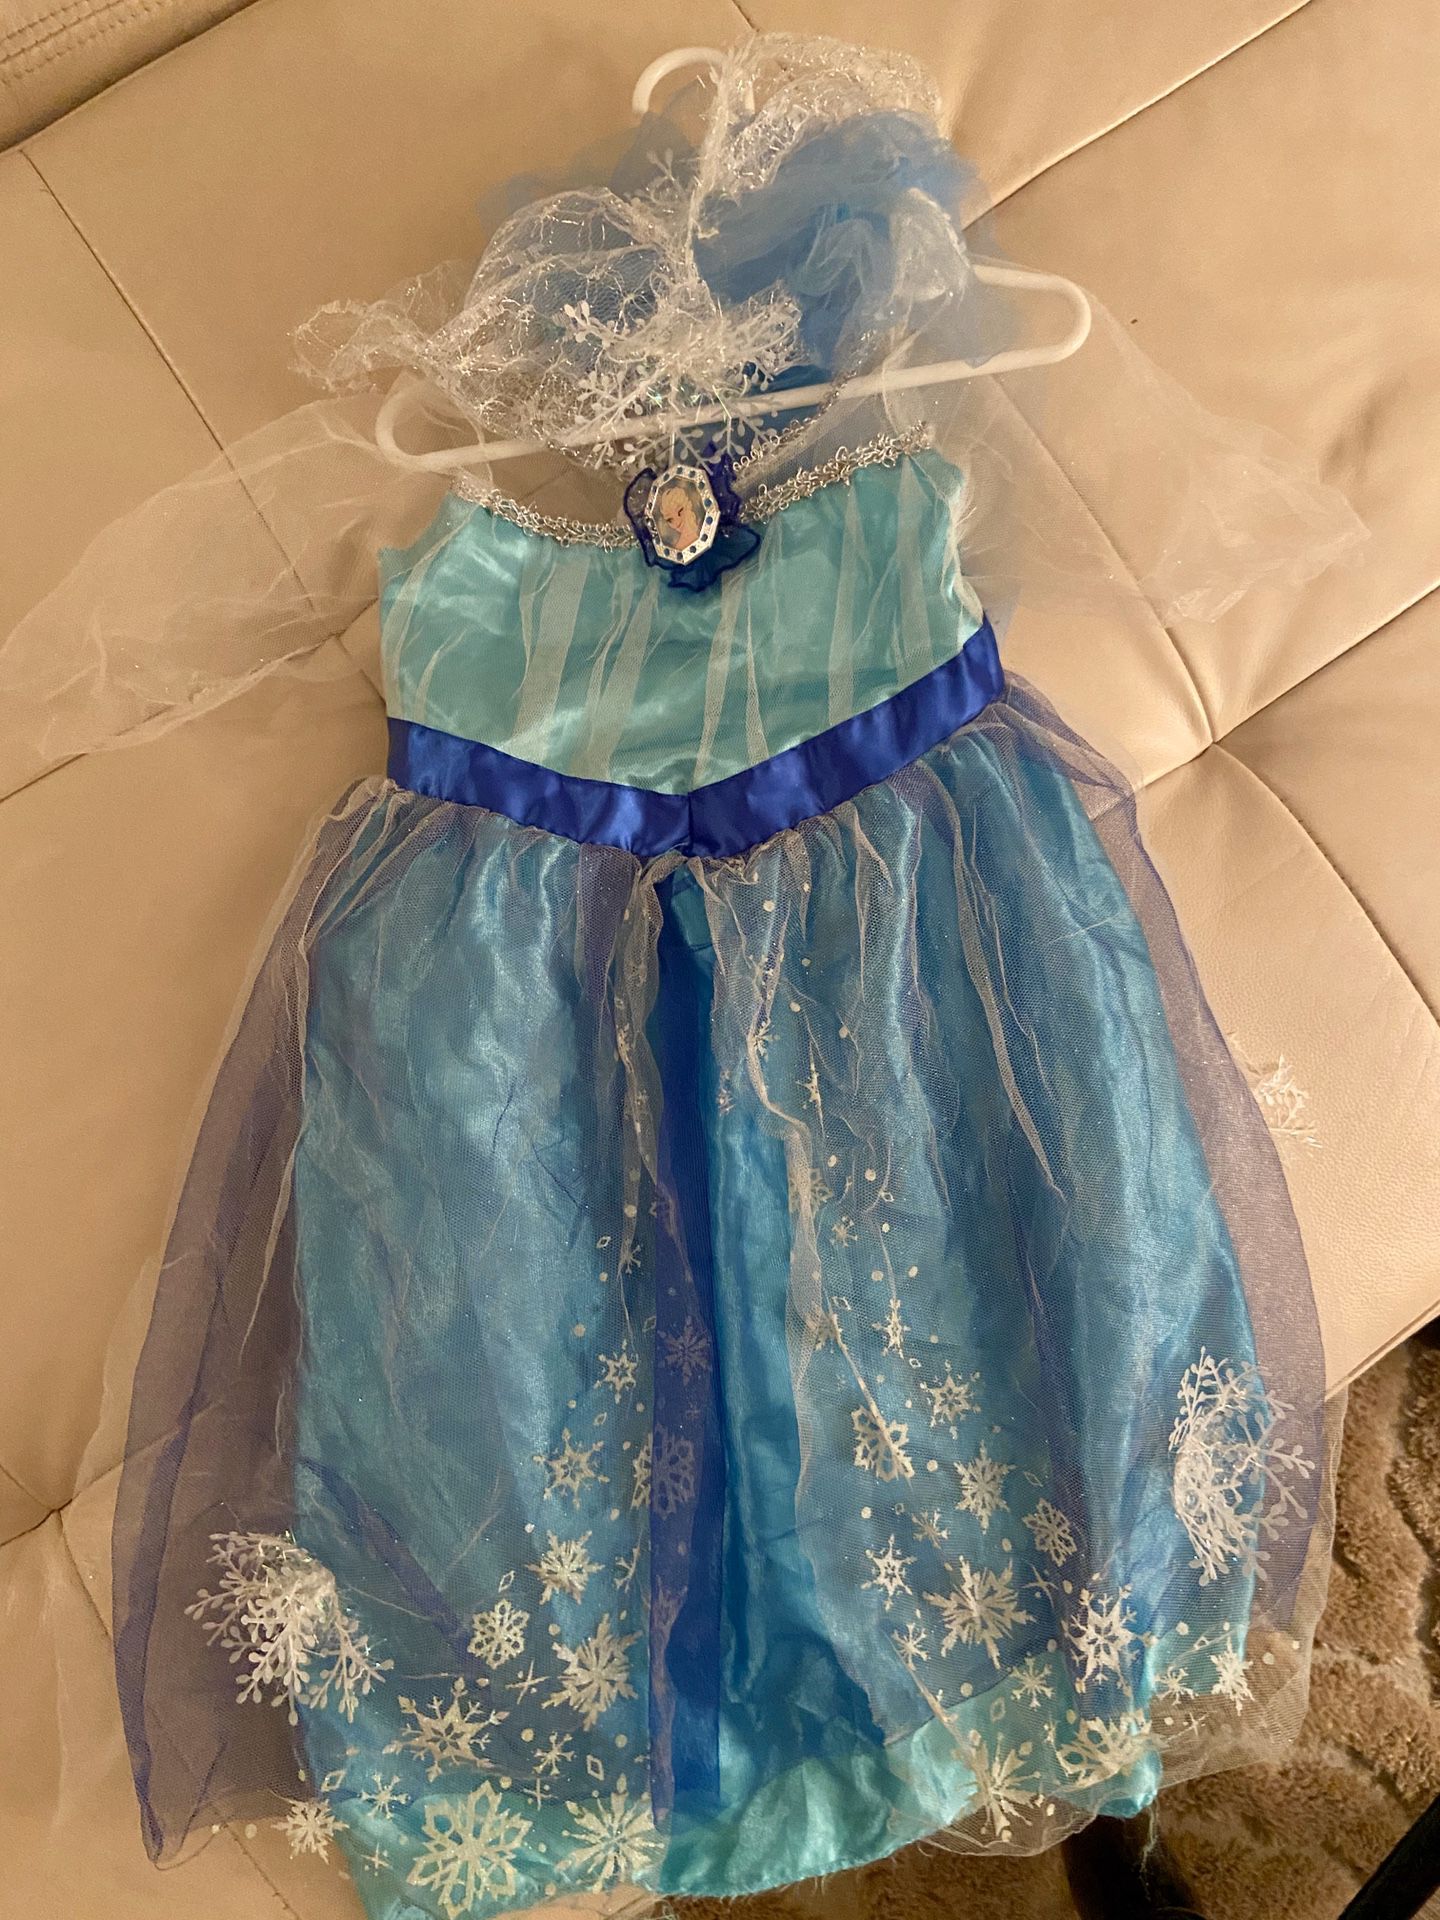 FROZEN Elsa Dress-Up Costume, Slippers, coloring book $10